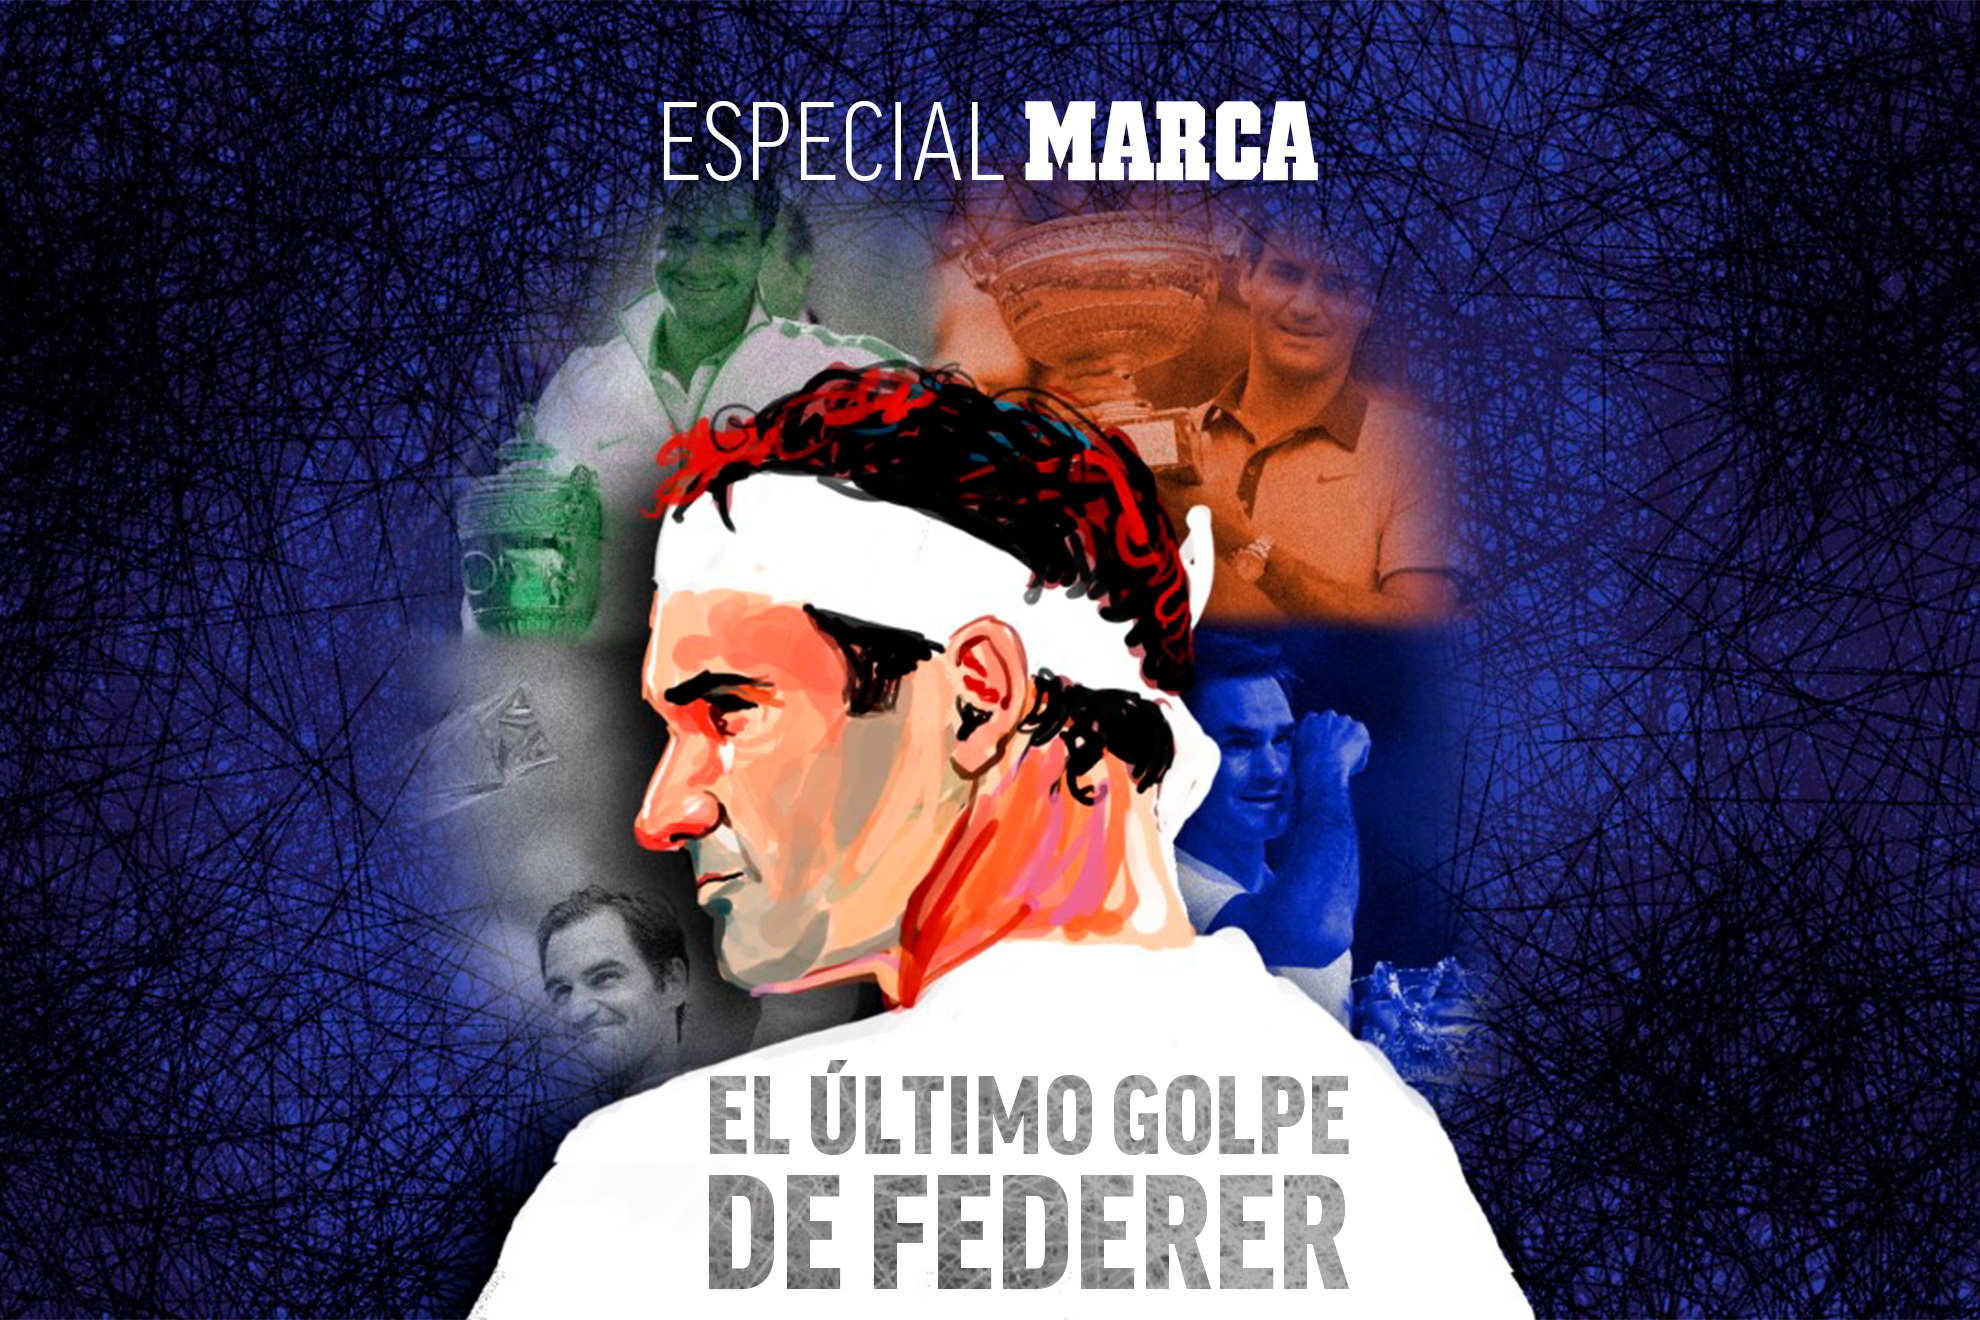 El último golpe de Roger Federer